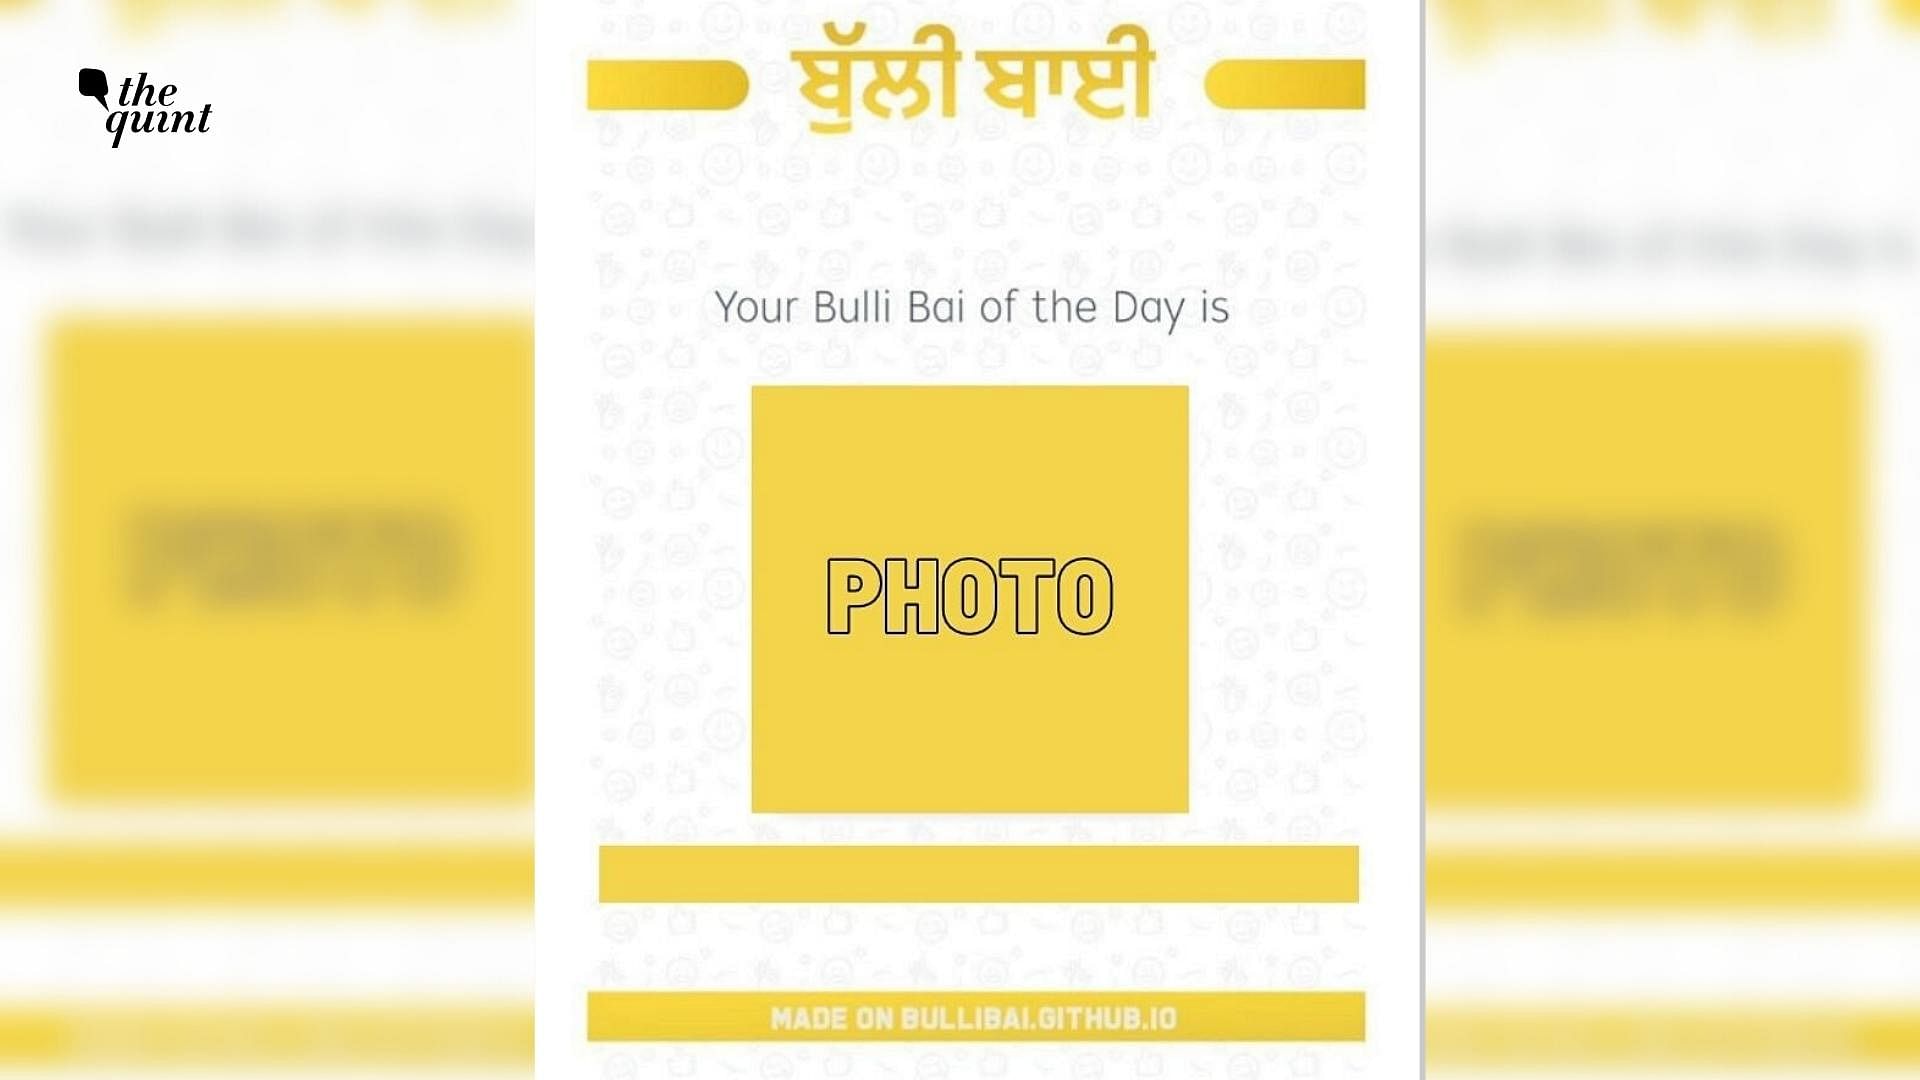 <div class="paragraphs"><p>Photos of hundreds of Muslim women were uploaded on an app named 'Bulli Bai' using GitHub.</p></div>